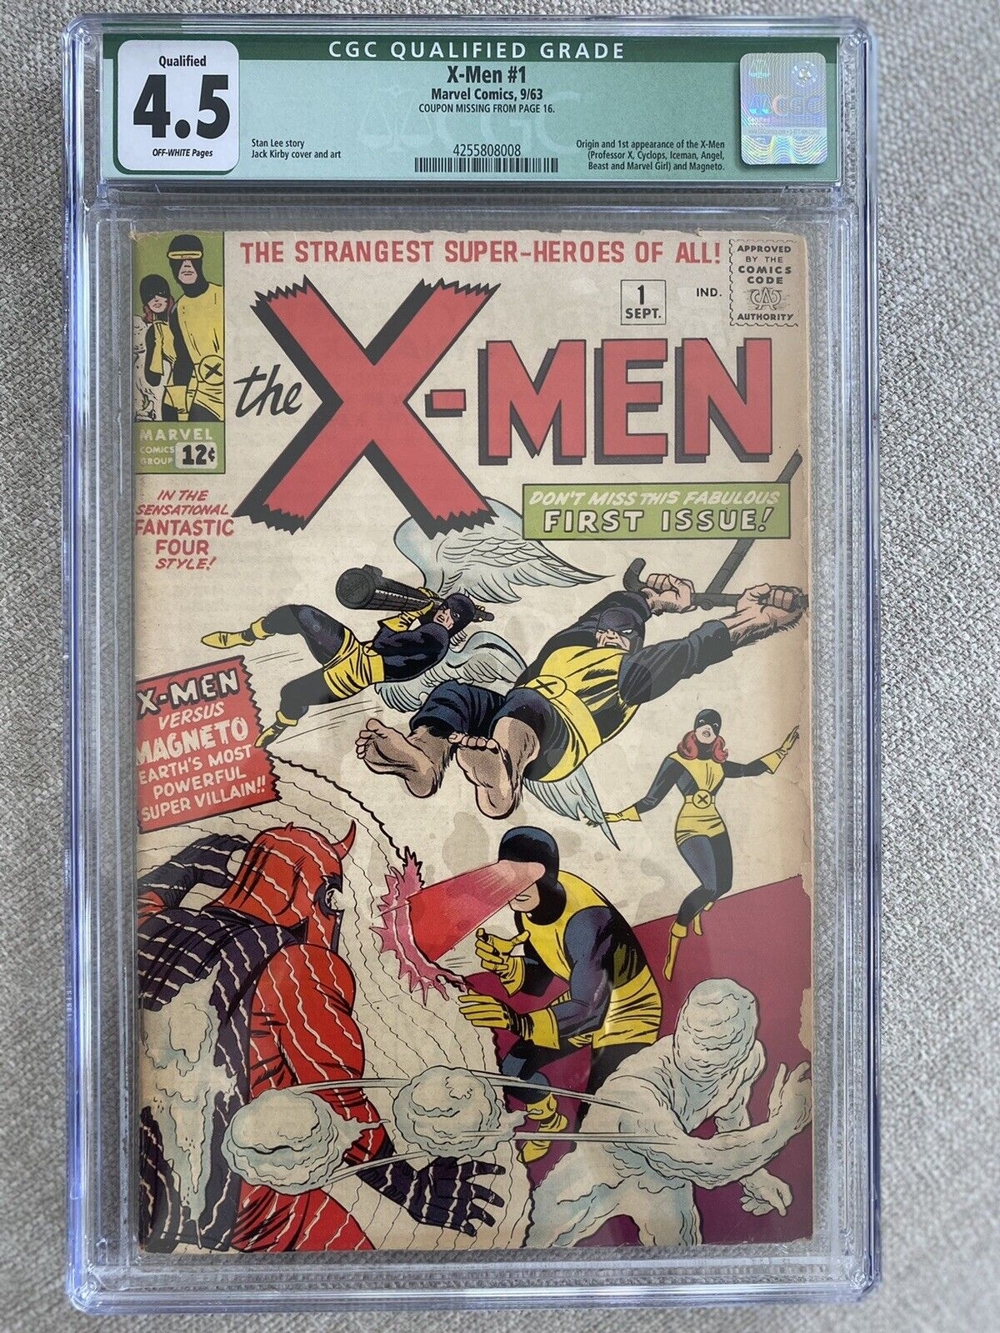 Marvel Comics X Men 1 4.5 CGC 1963 1st appearance Xmen Unacanny Cyclops Beast